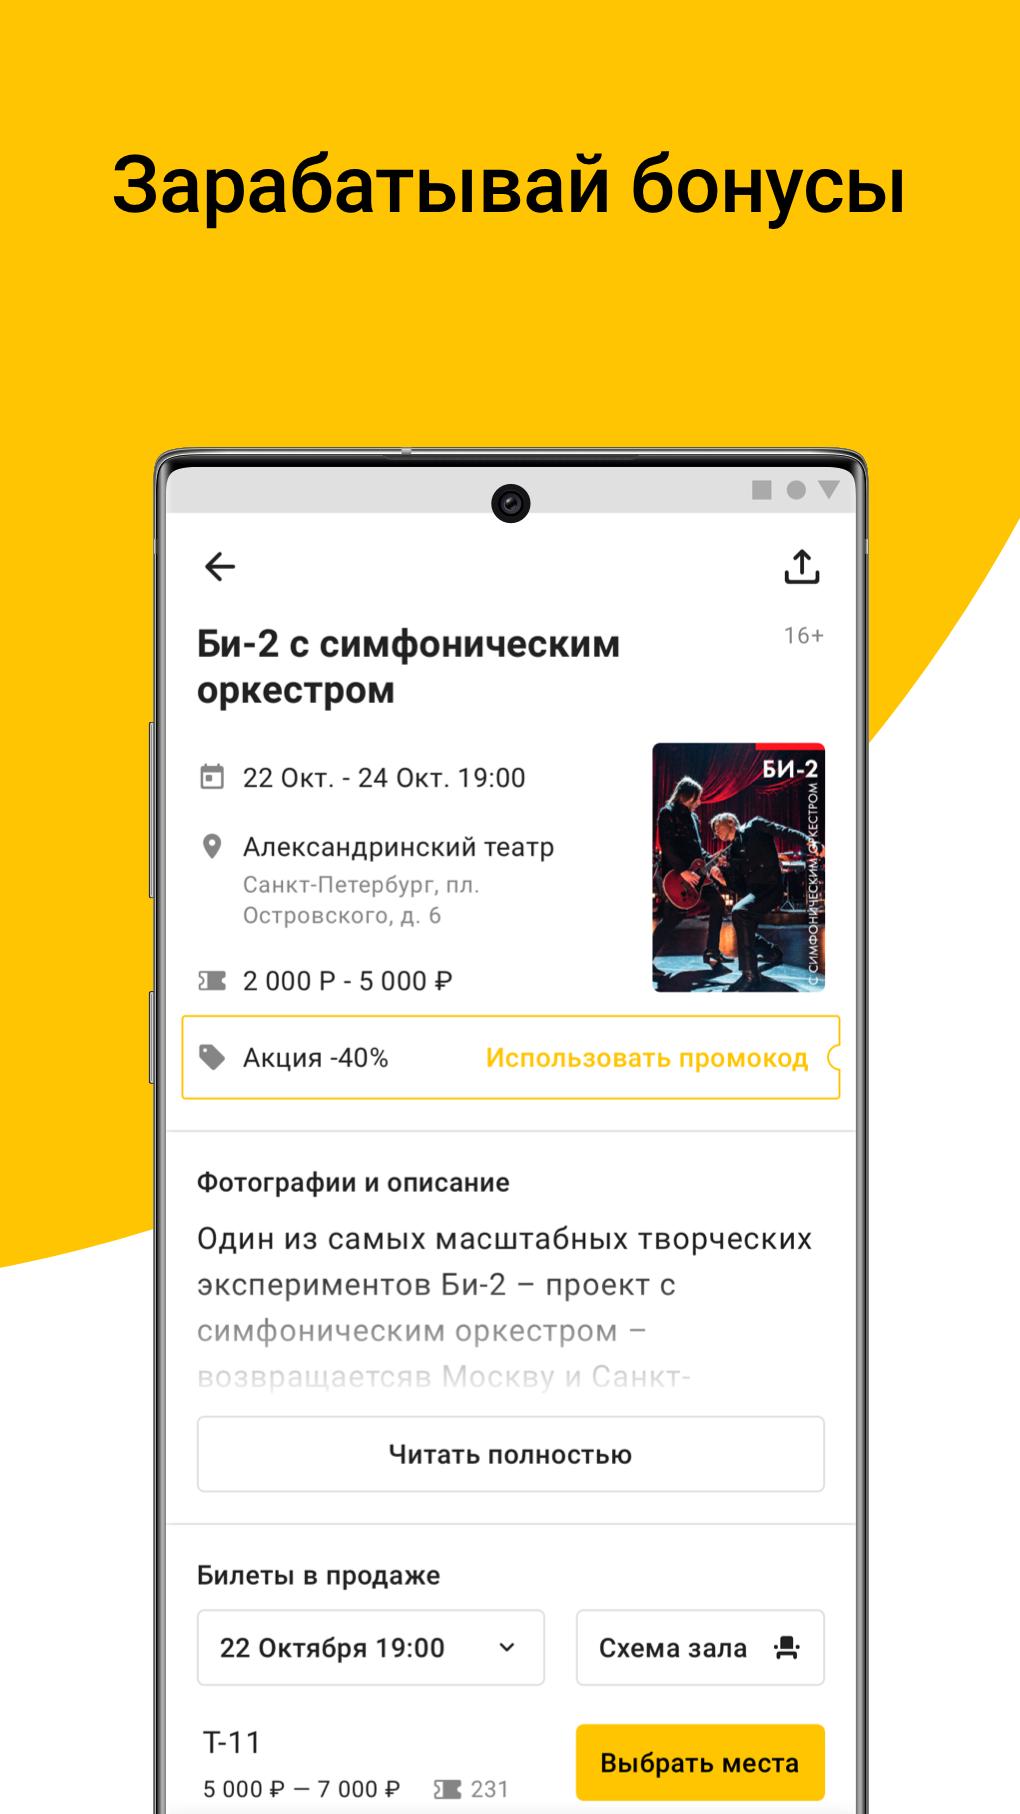 Kassir.Ru: Афиши и билеты на концерты и спектакли 1.0.2 Screenshot 2